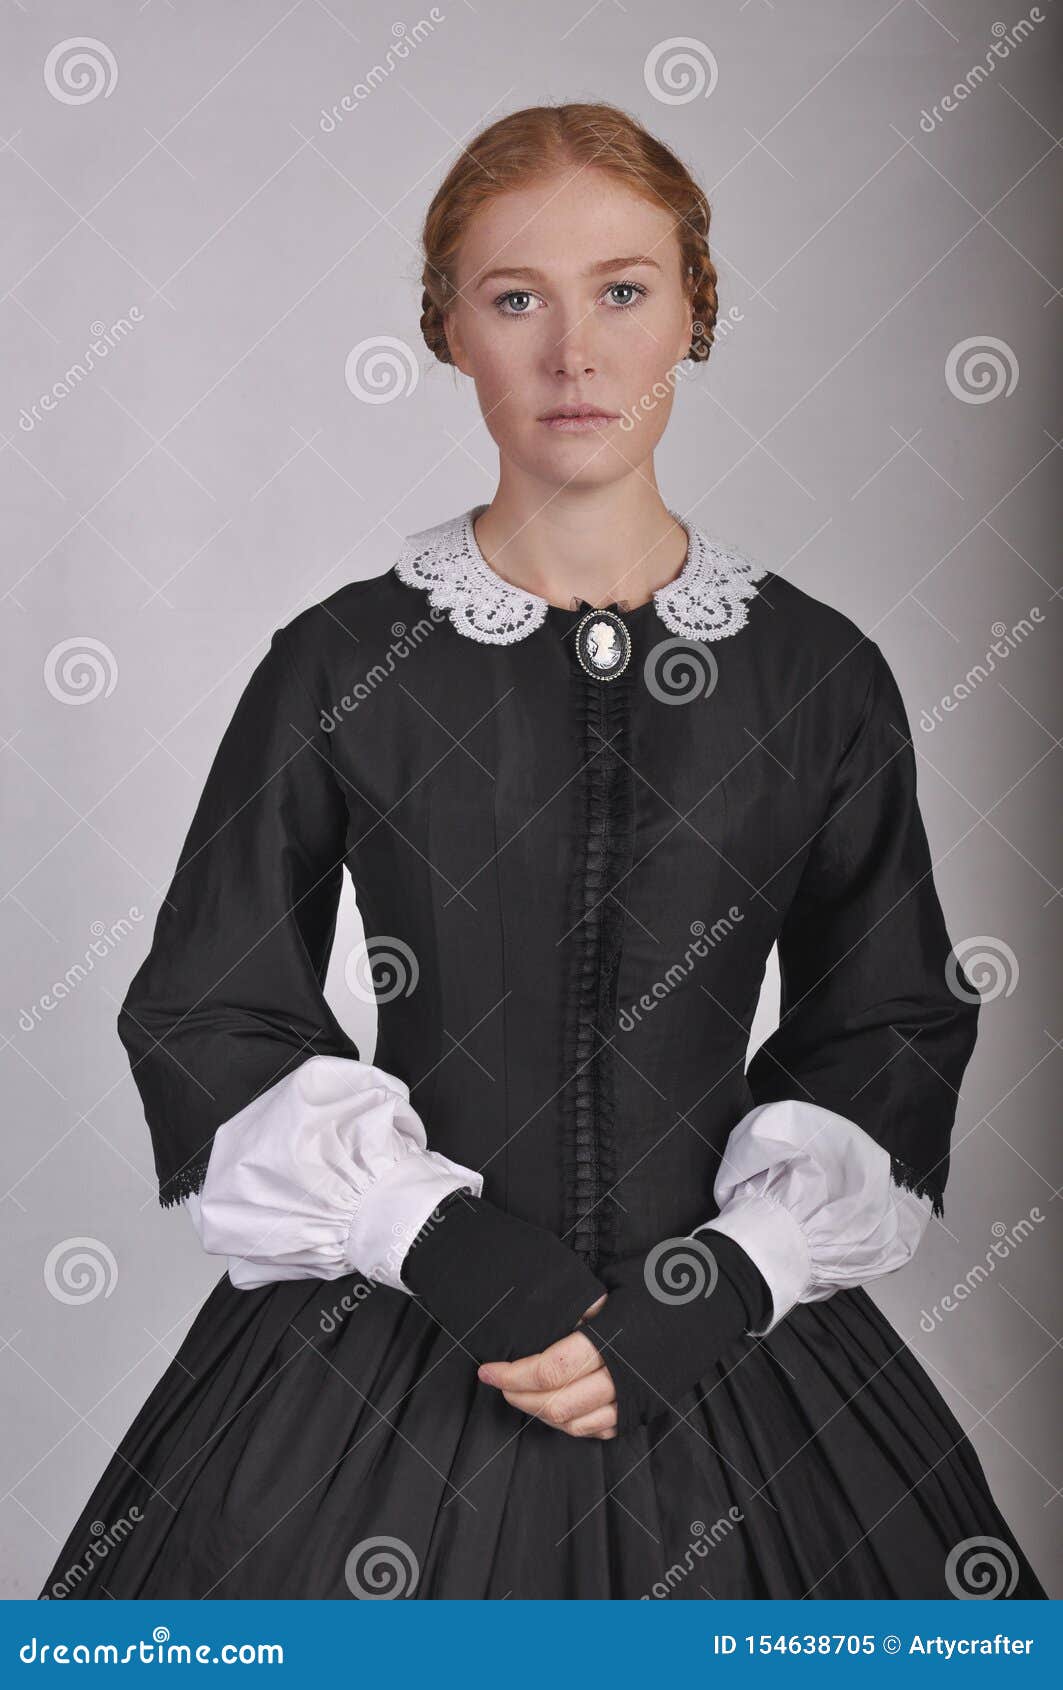 victorian woman in black ensemble  on studio backdrop